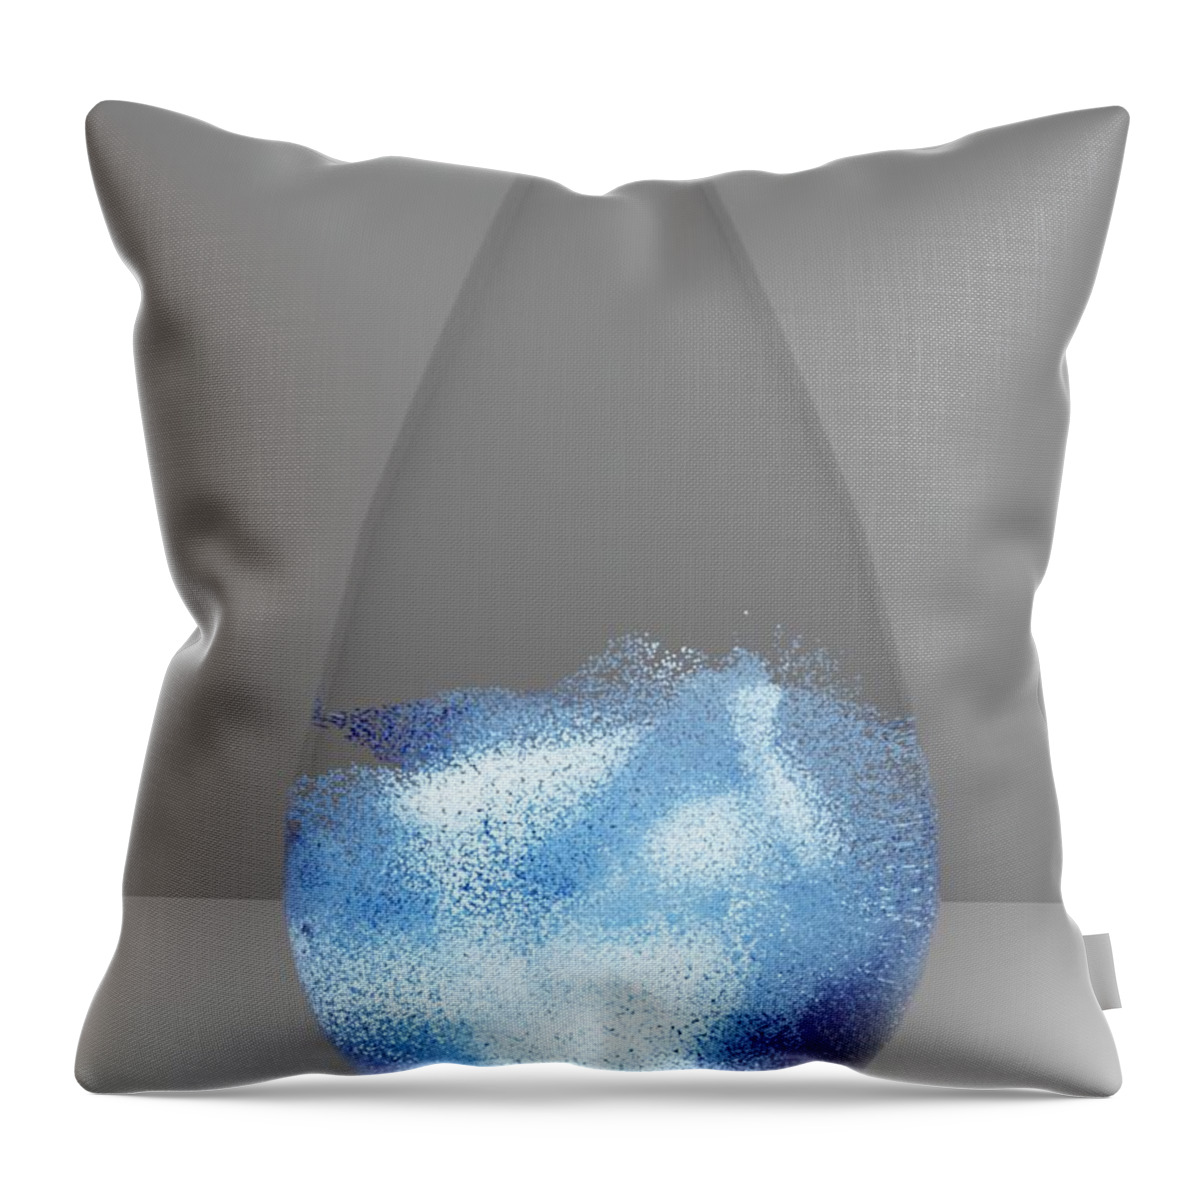 Nft Throw Pillow featuring the digital art 101 Rain Drop Wave 2 by David Bridburg